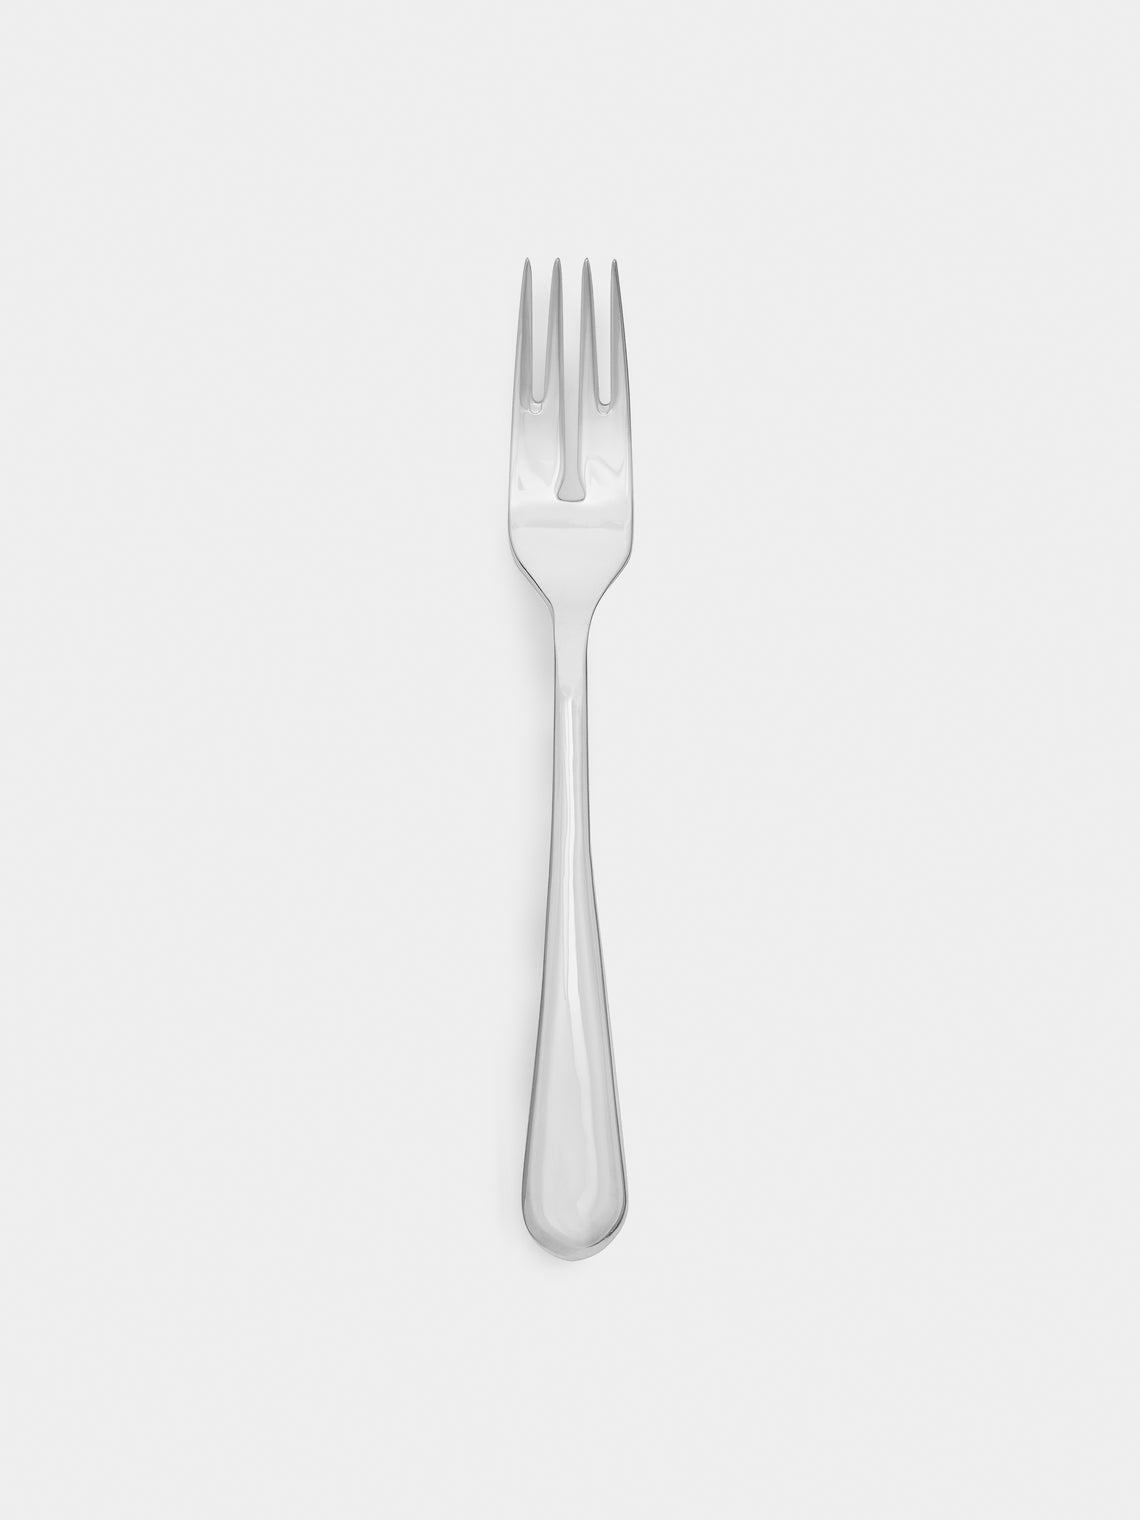 Wiener Silber Manufactur - Josef Hoffmann 135 Silver-Plated Fish Fork - Silver - ABASK - 